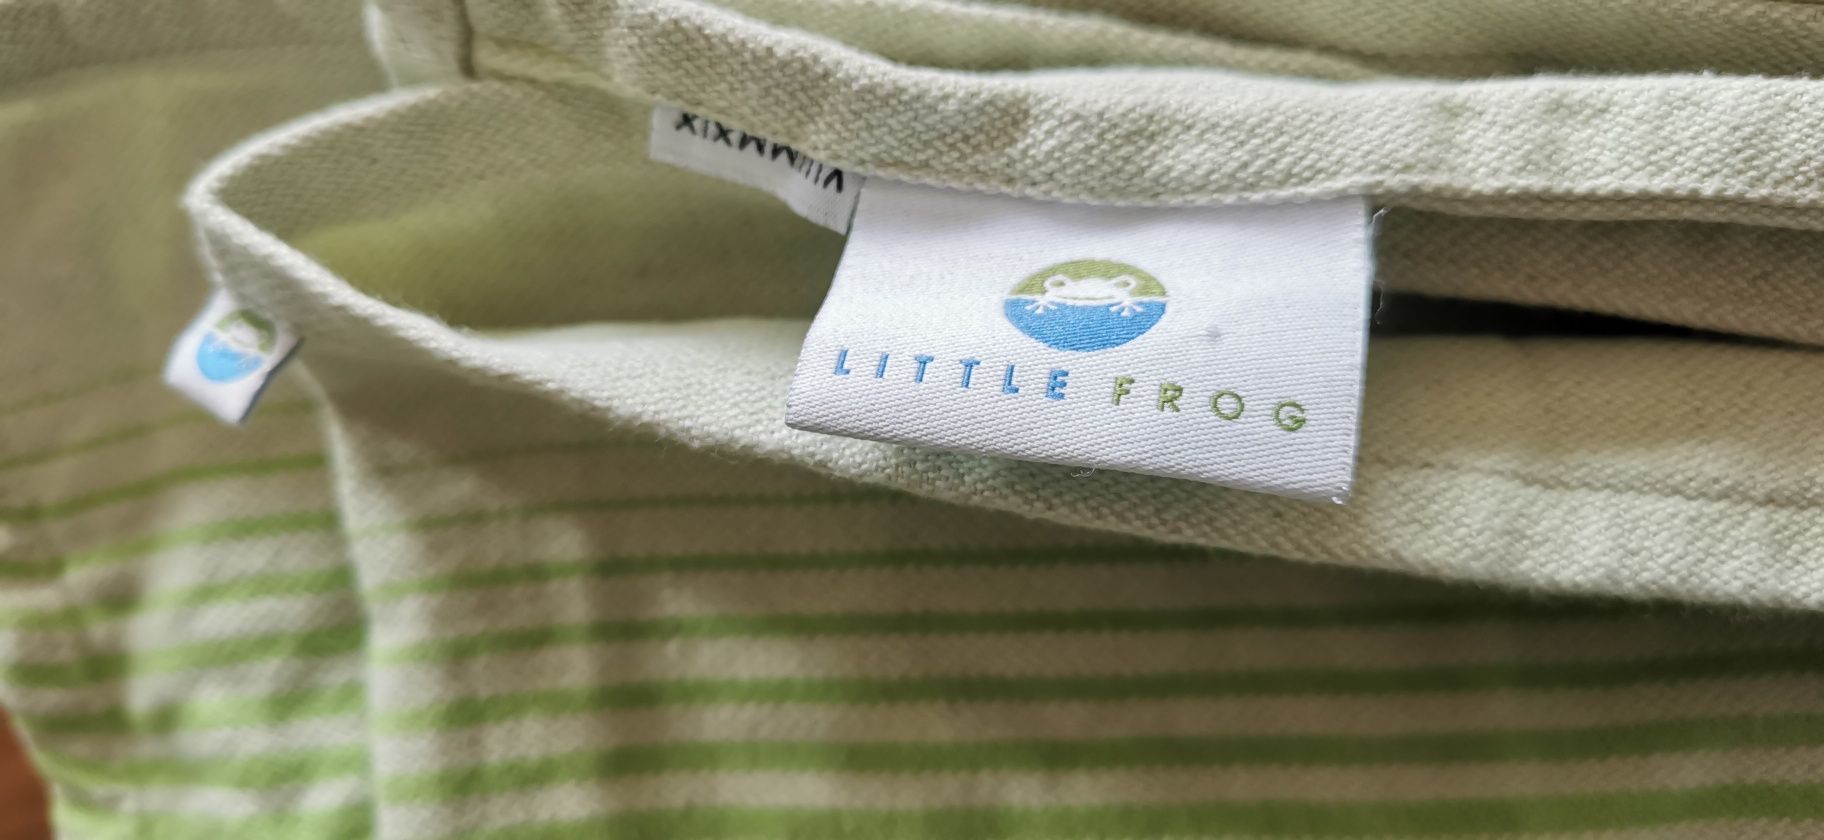 Chusta do noszenia dzieci Little frog